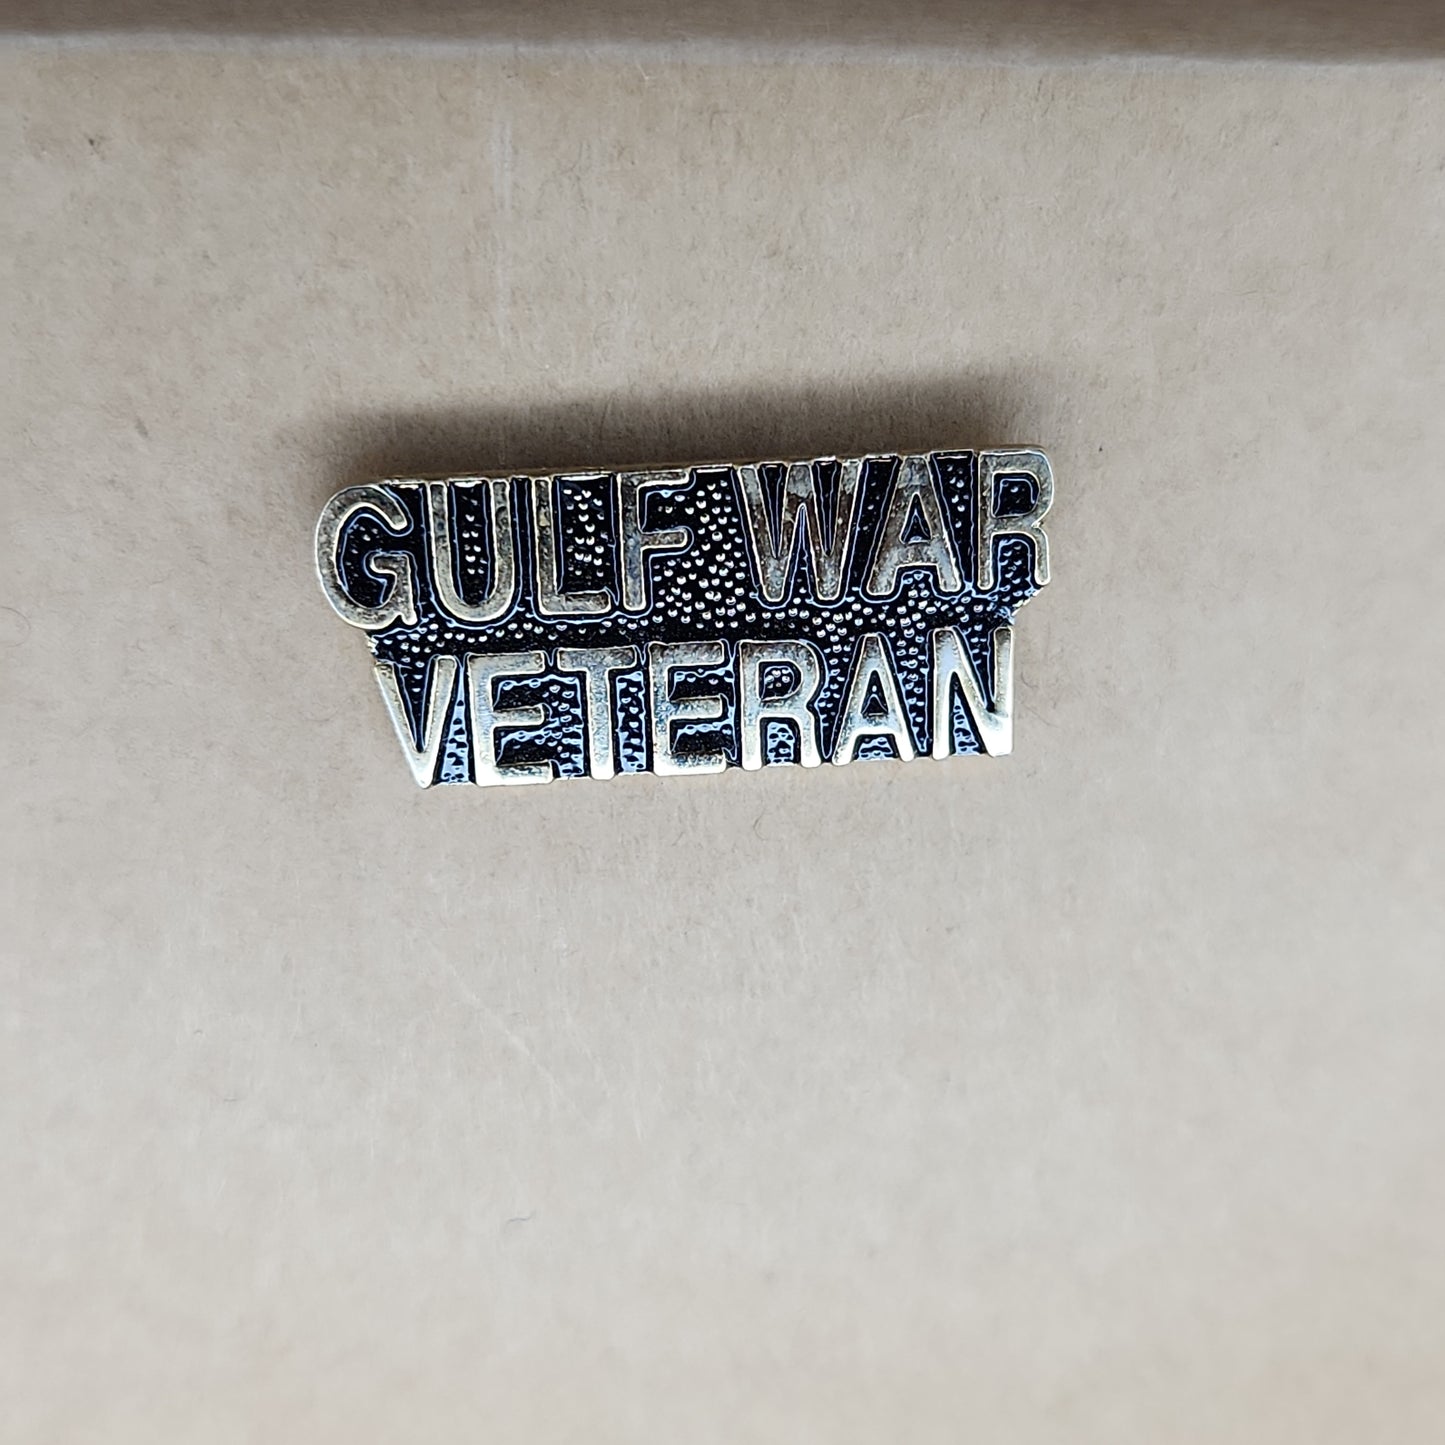 Gulf War veteran